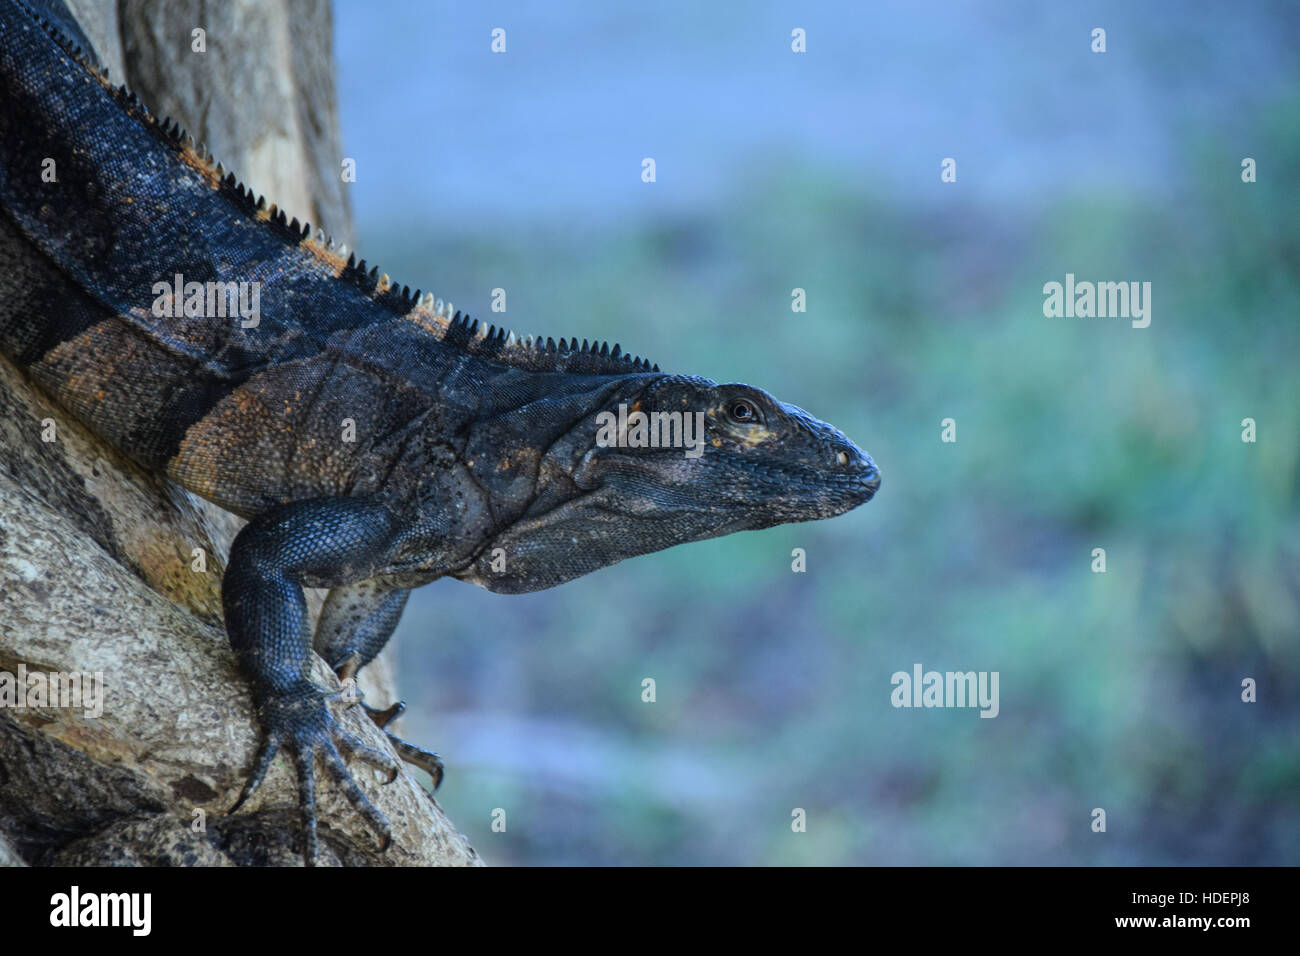 Iguana watching the camera, catching the sunlight on a tree Stock Photo